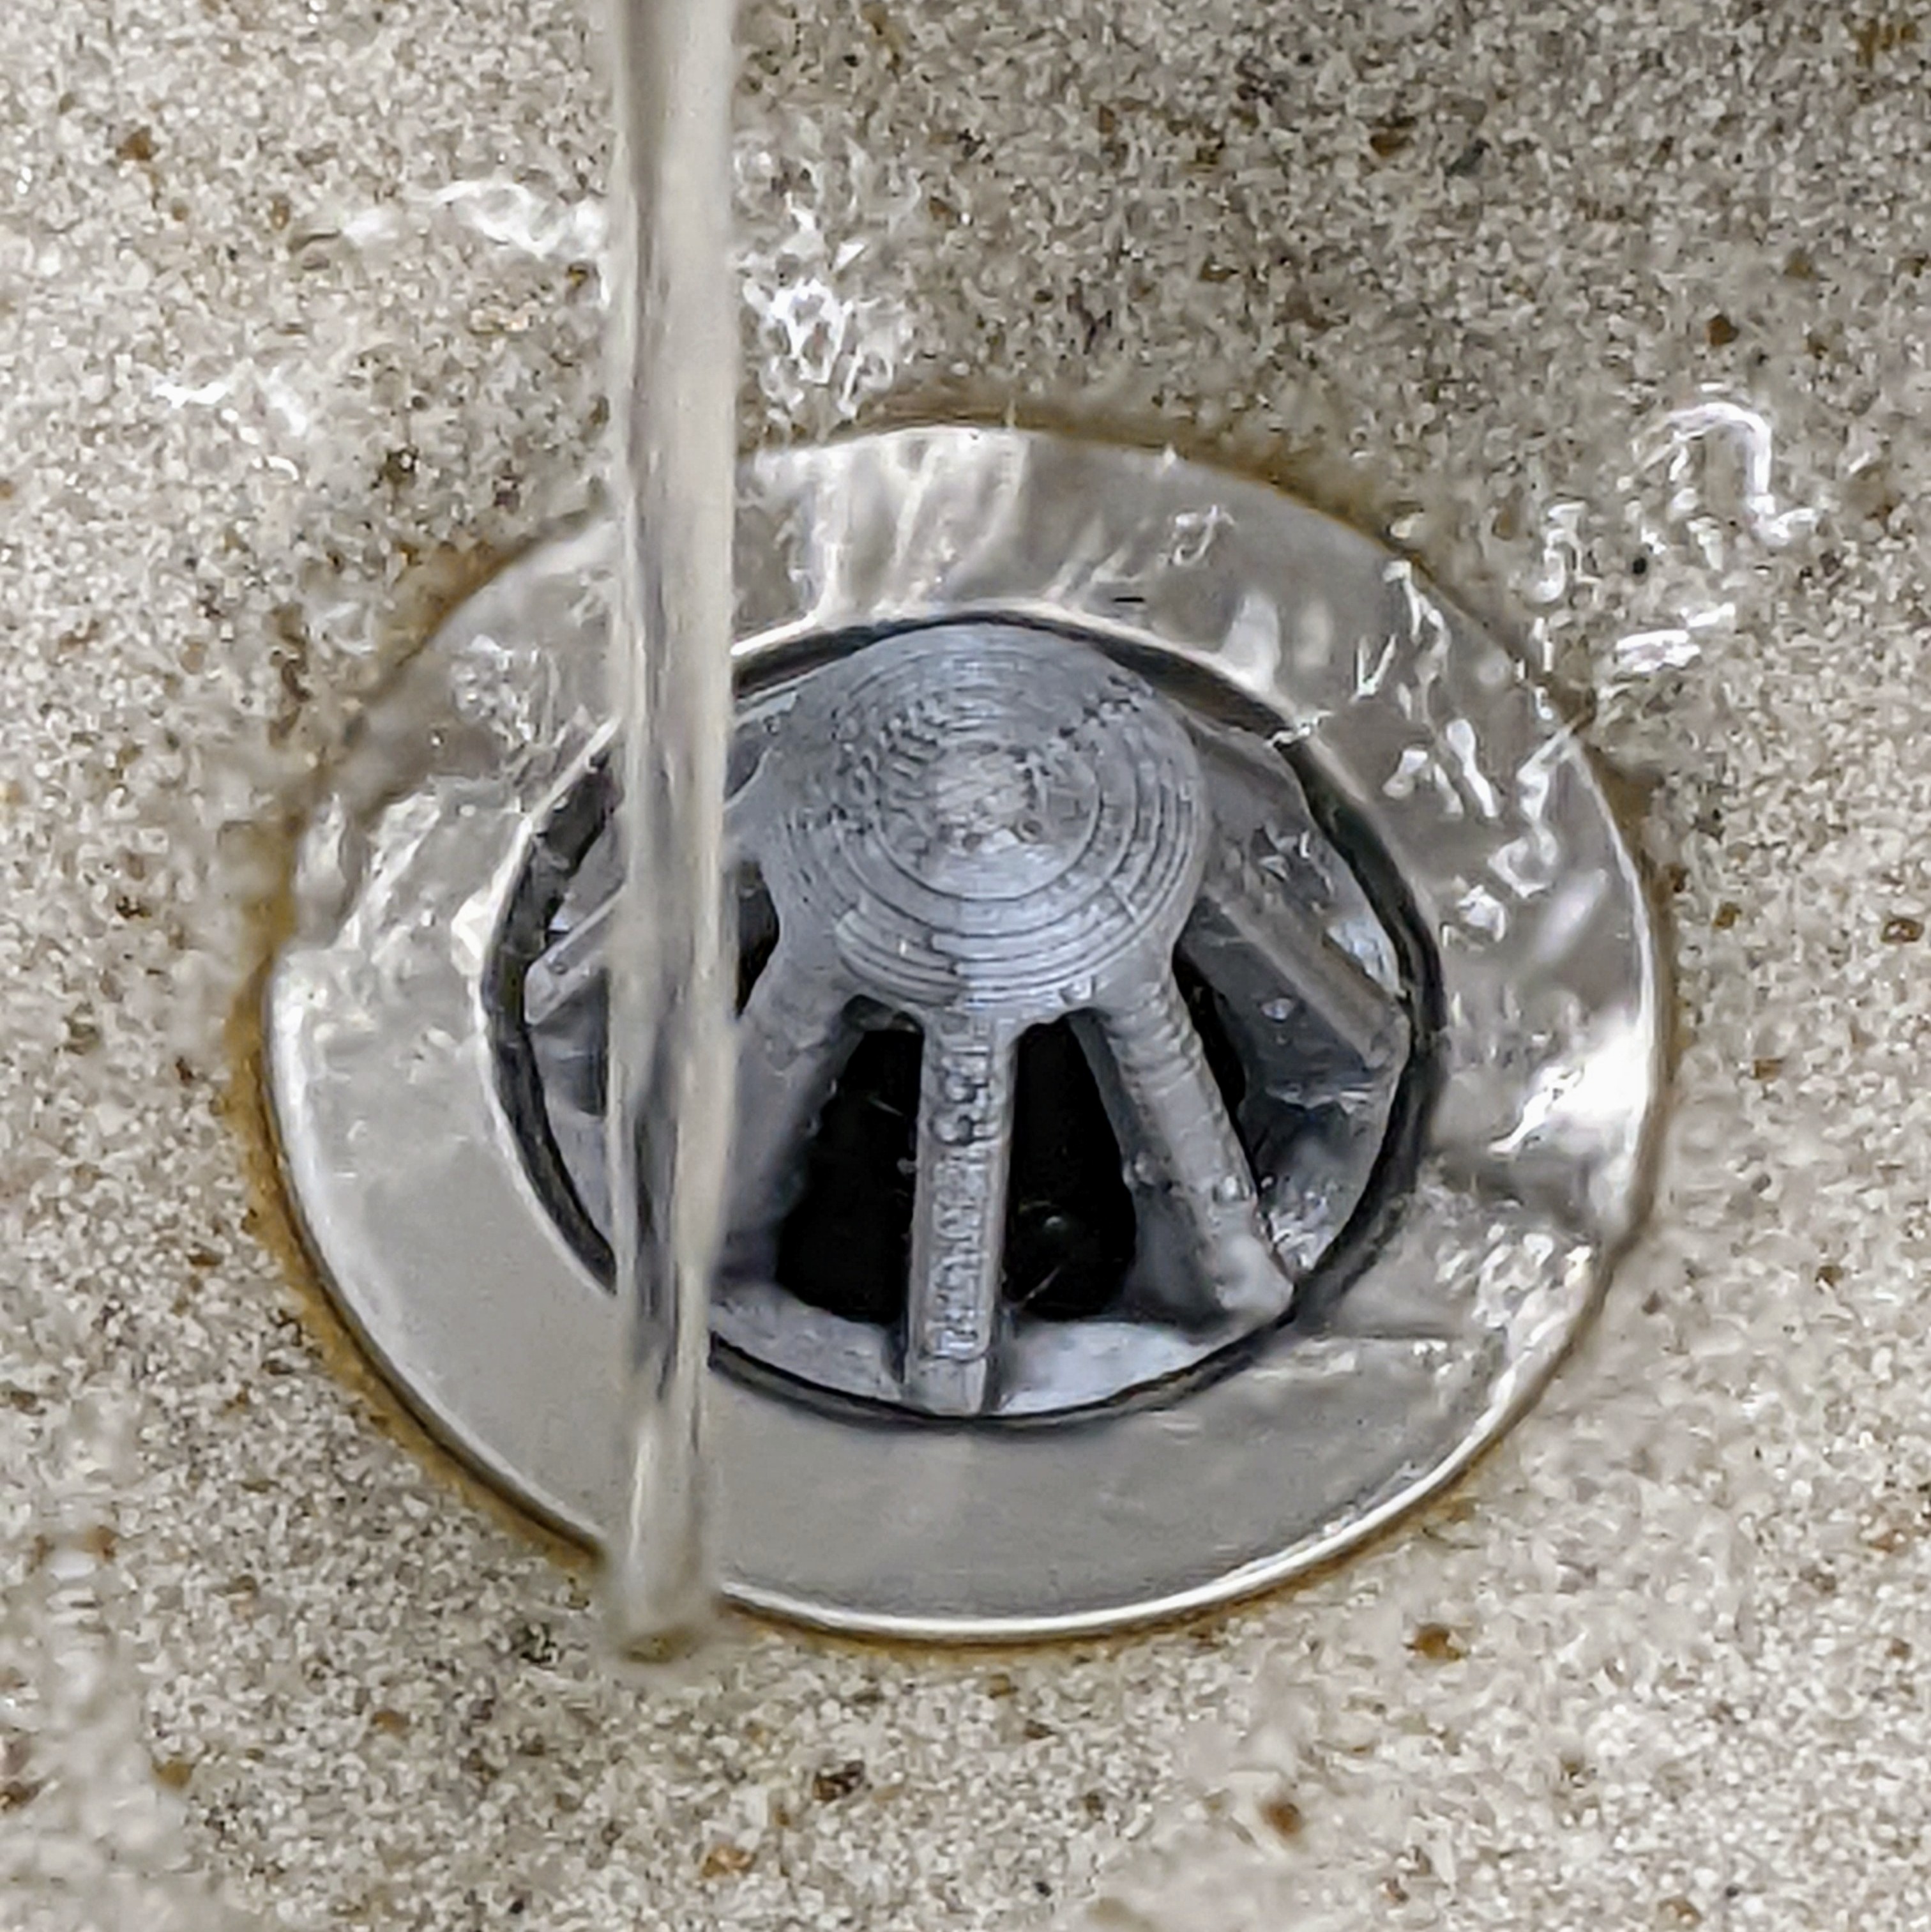 Bathroom sink drain screen